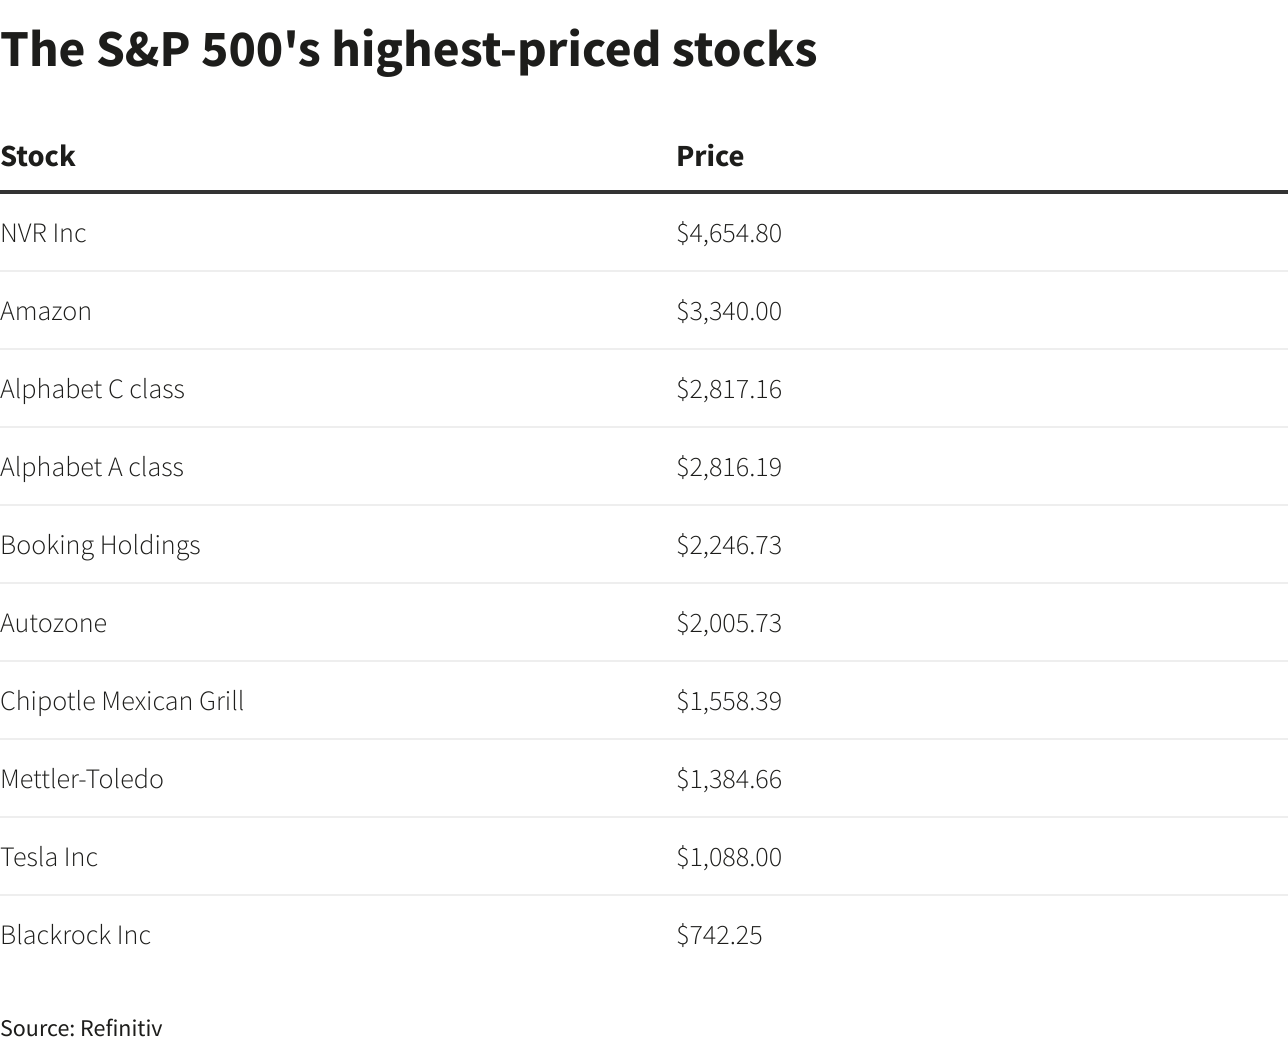 The S&P 500's highest-priced stocks